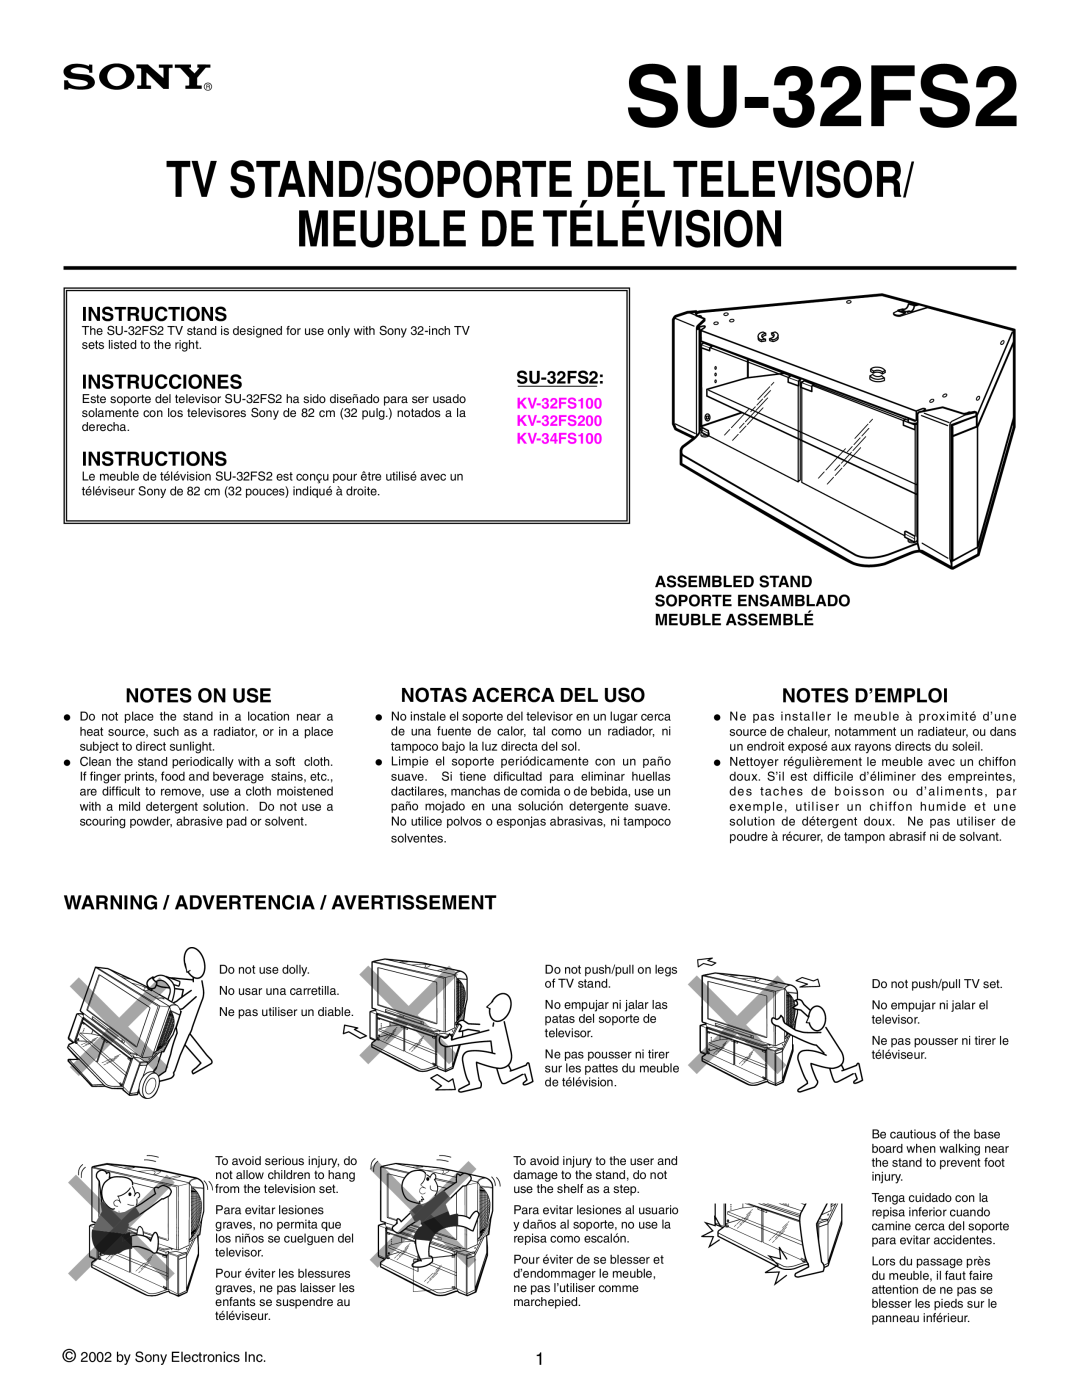 Sony SU-32FS2 manual Meuble De Télévision, Tv Stand/Soporte Del Televisor, Instructions, Instrucciones, Notes On Use 